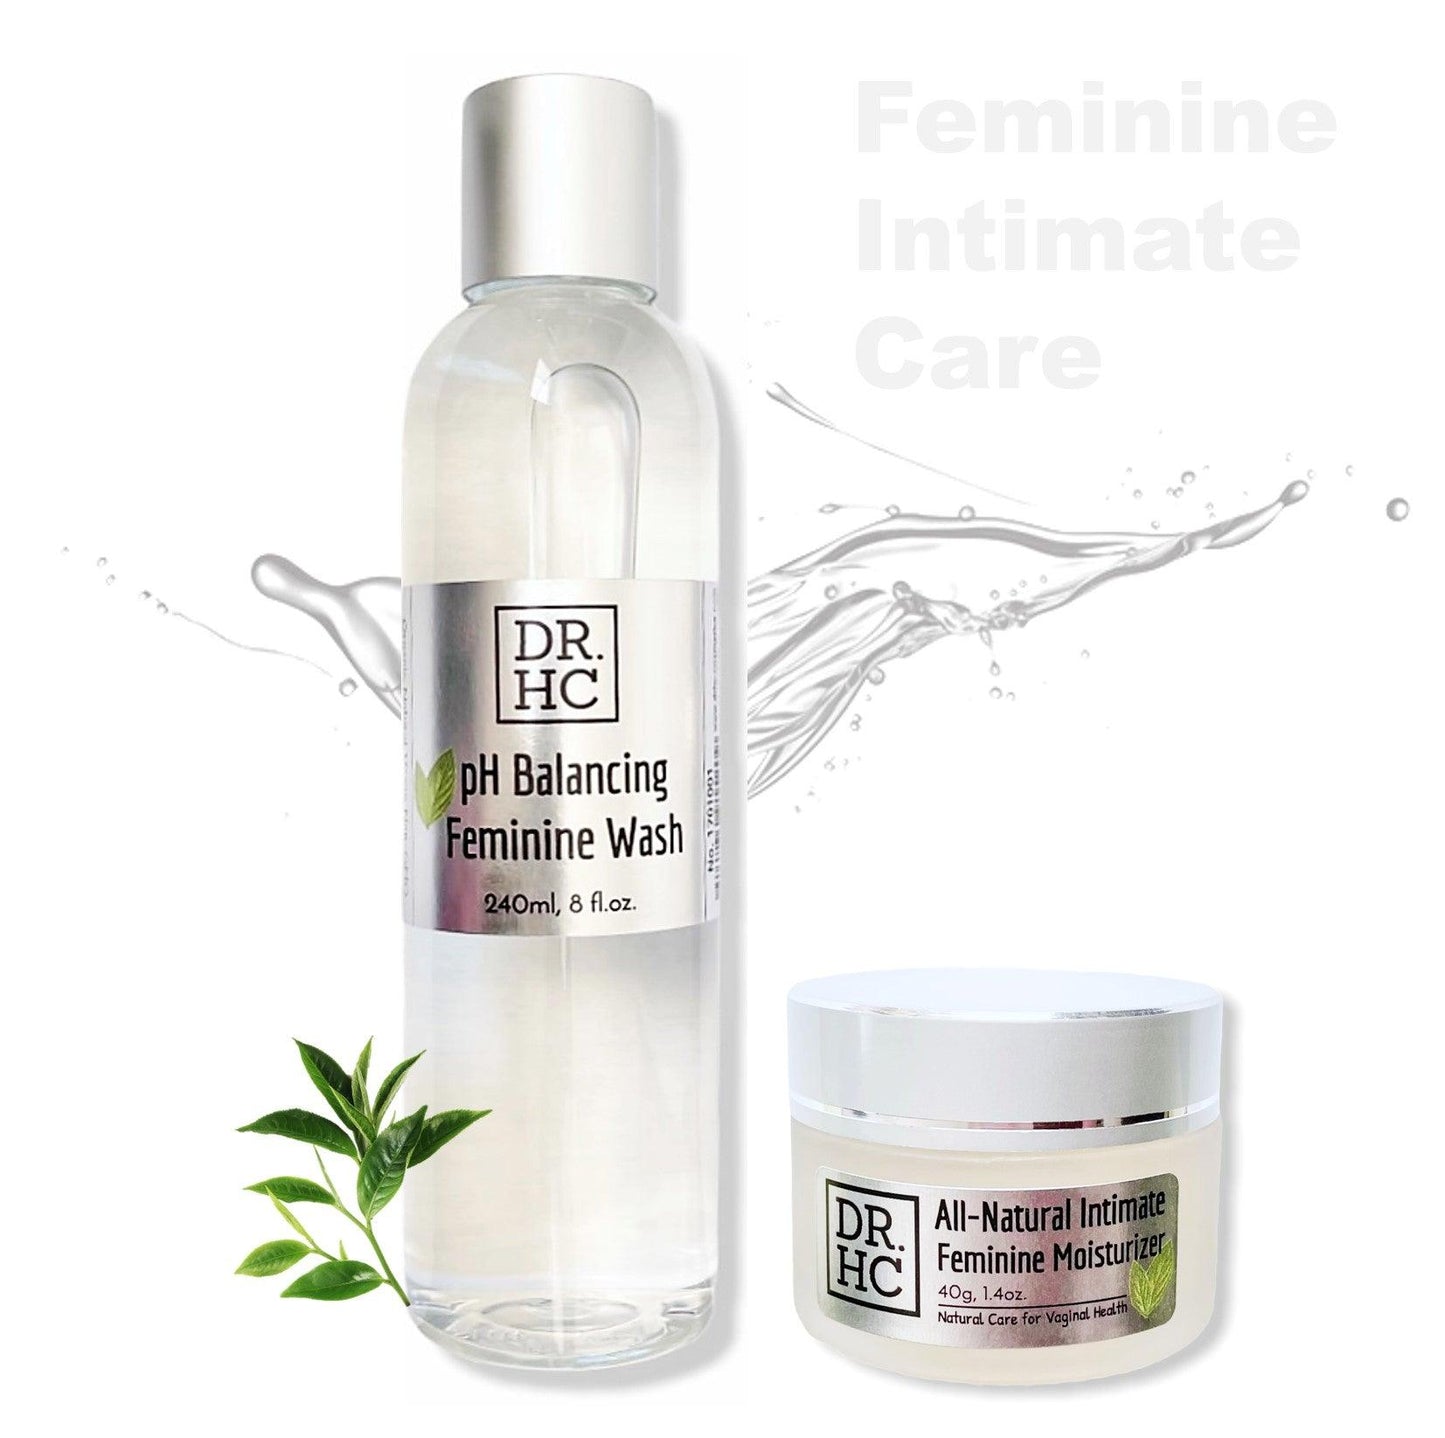 DR.HC All-Natural Intimate Feminine Moisturizer (40g, 1.4oz.) (Vagina Moiturizing, Anti-itch, Anti-odor)